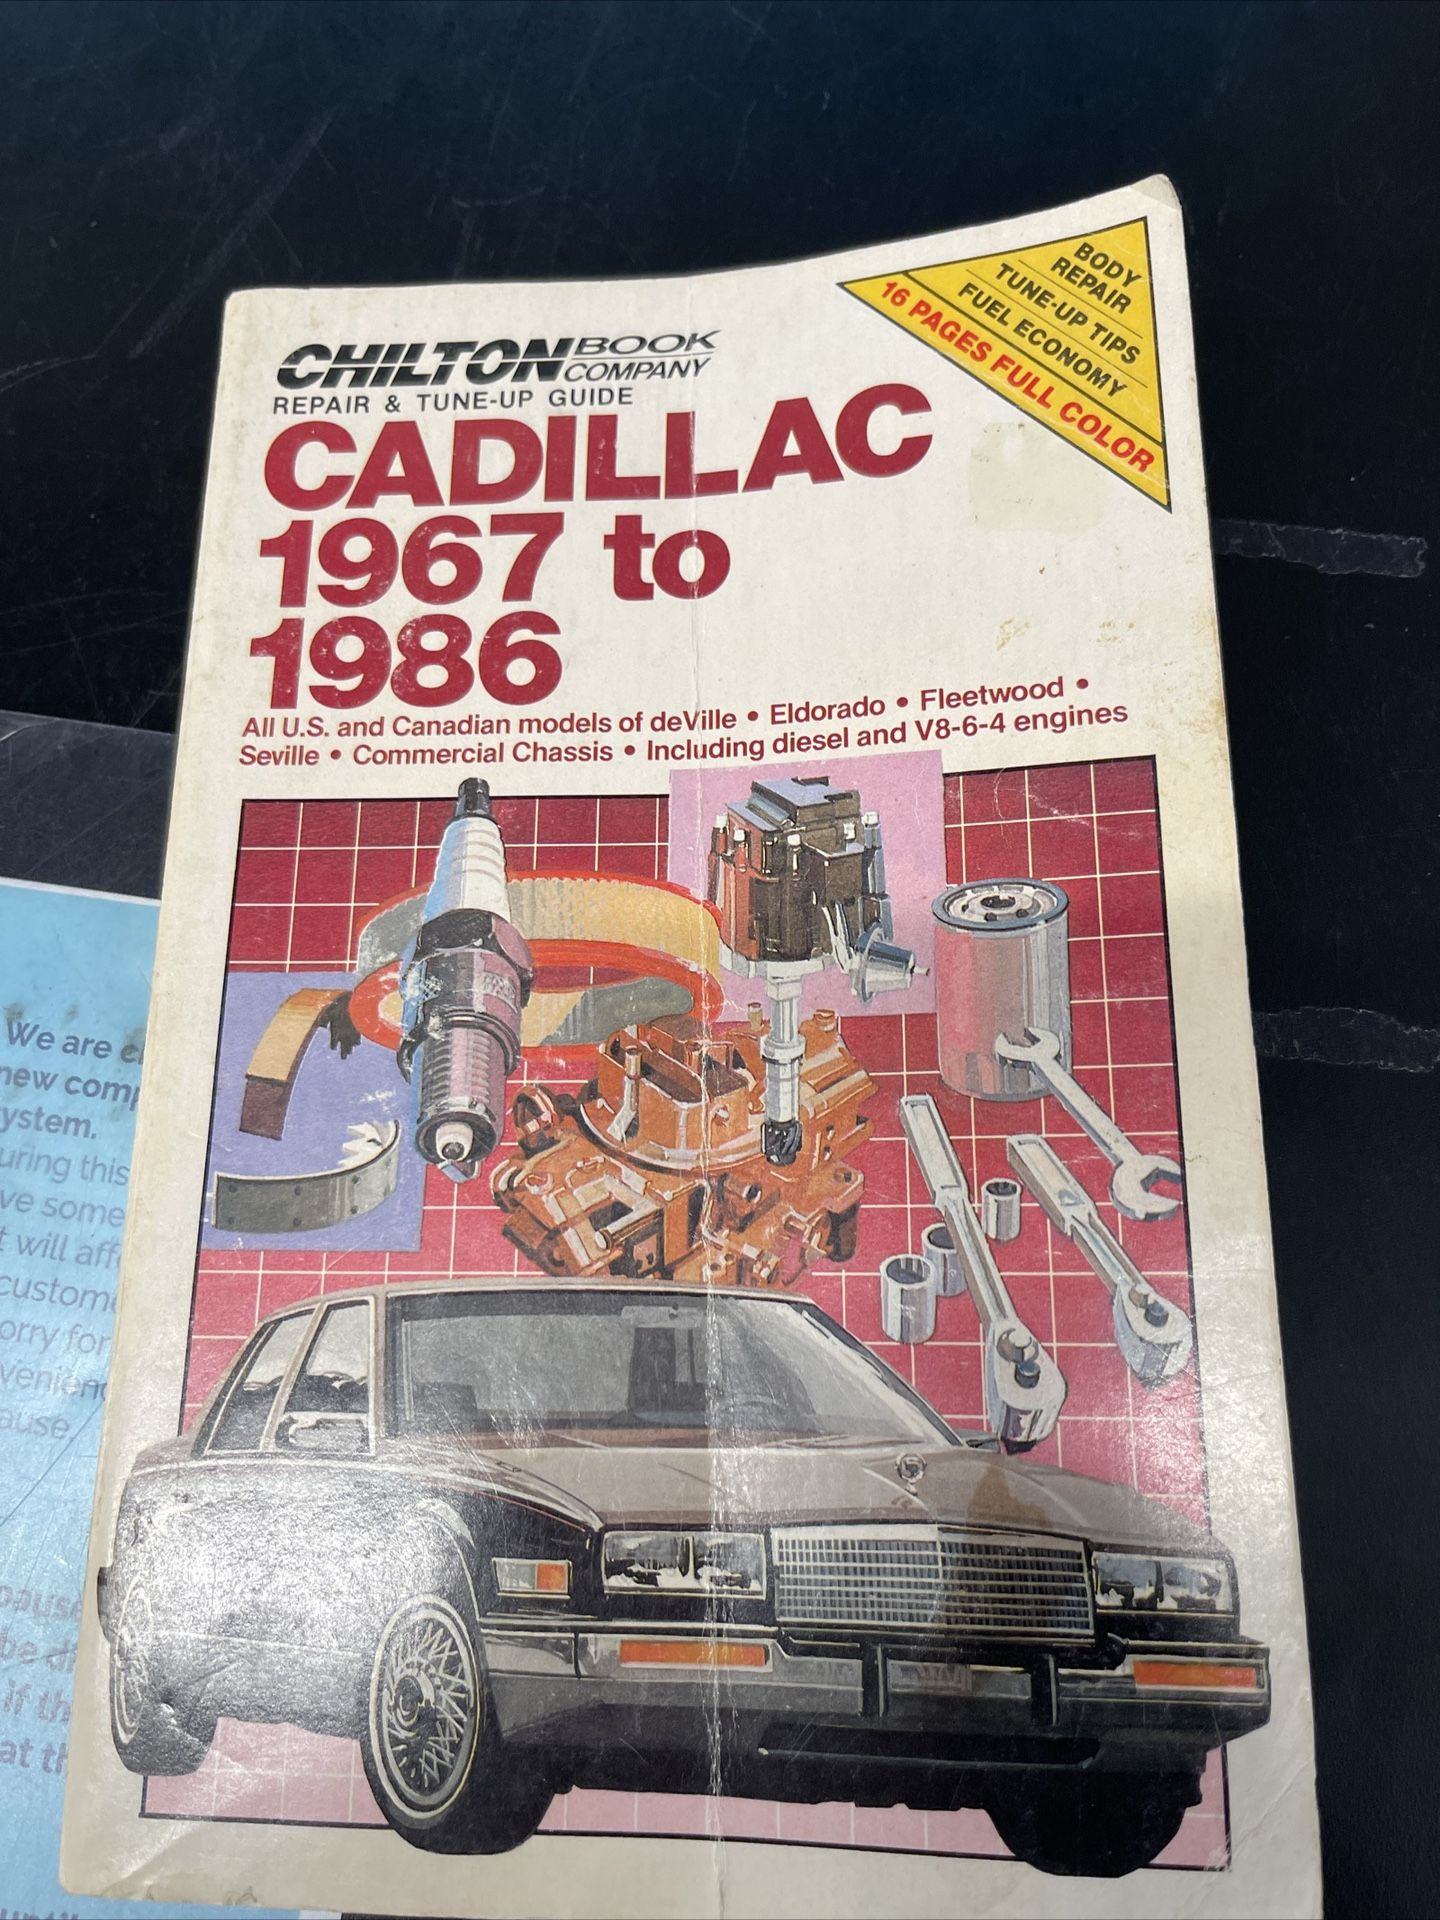  Chilton - Cadillac 1967 to 1986 - Repair & Tune-Up Guide - DeVille, Eldorado Etc